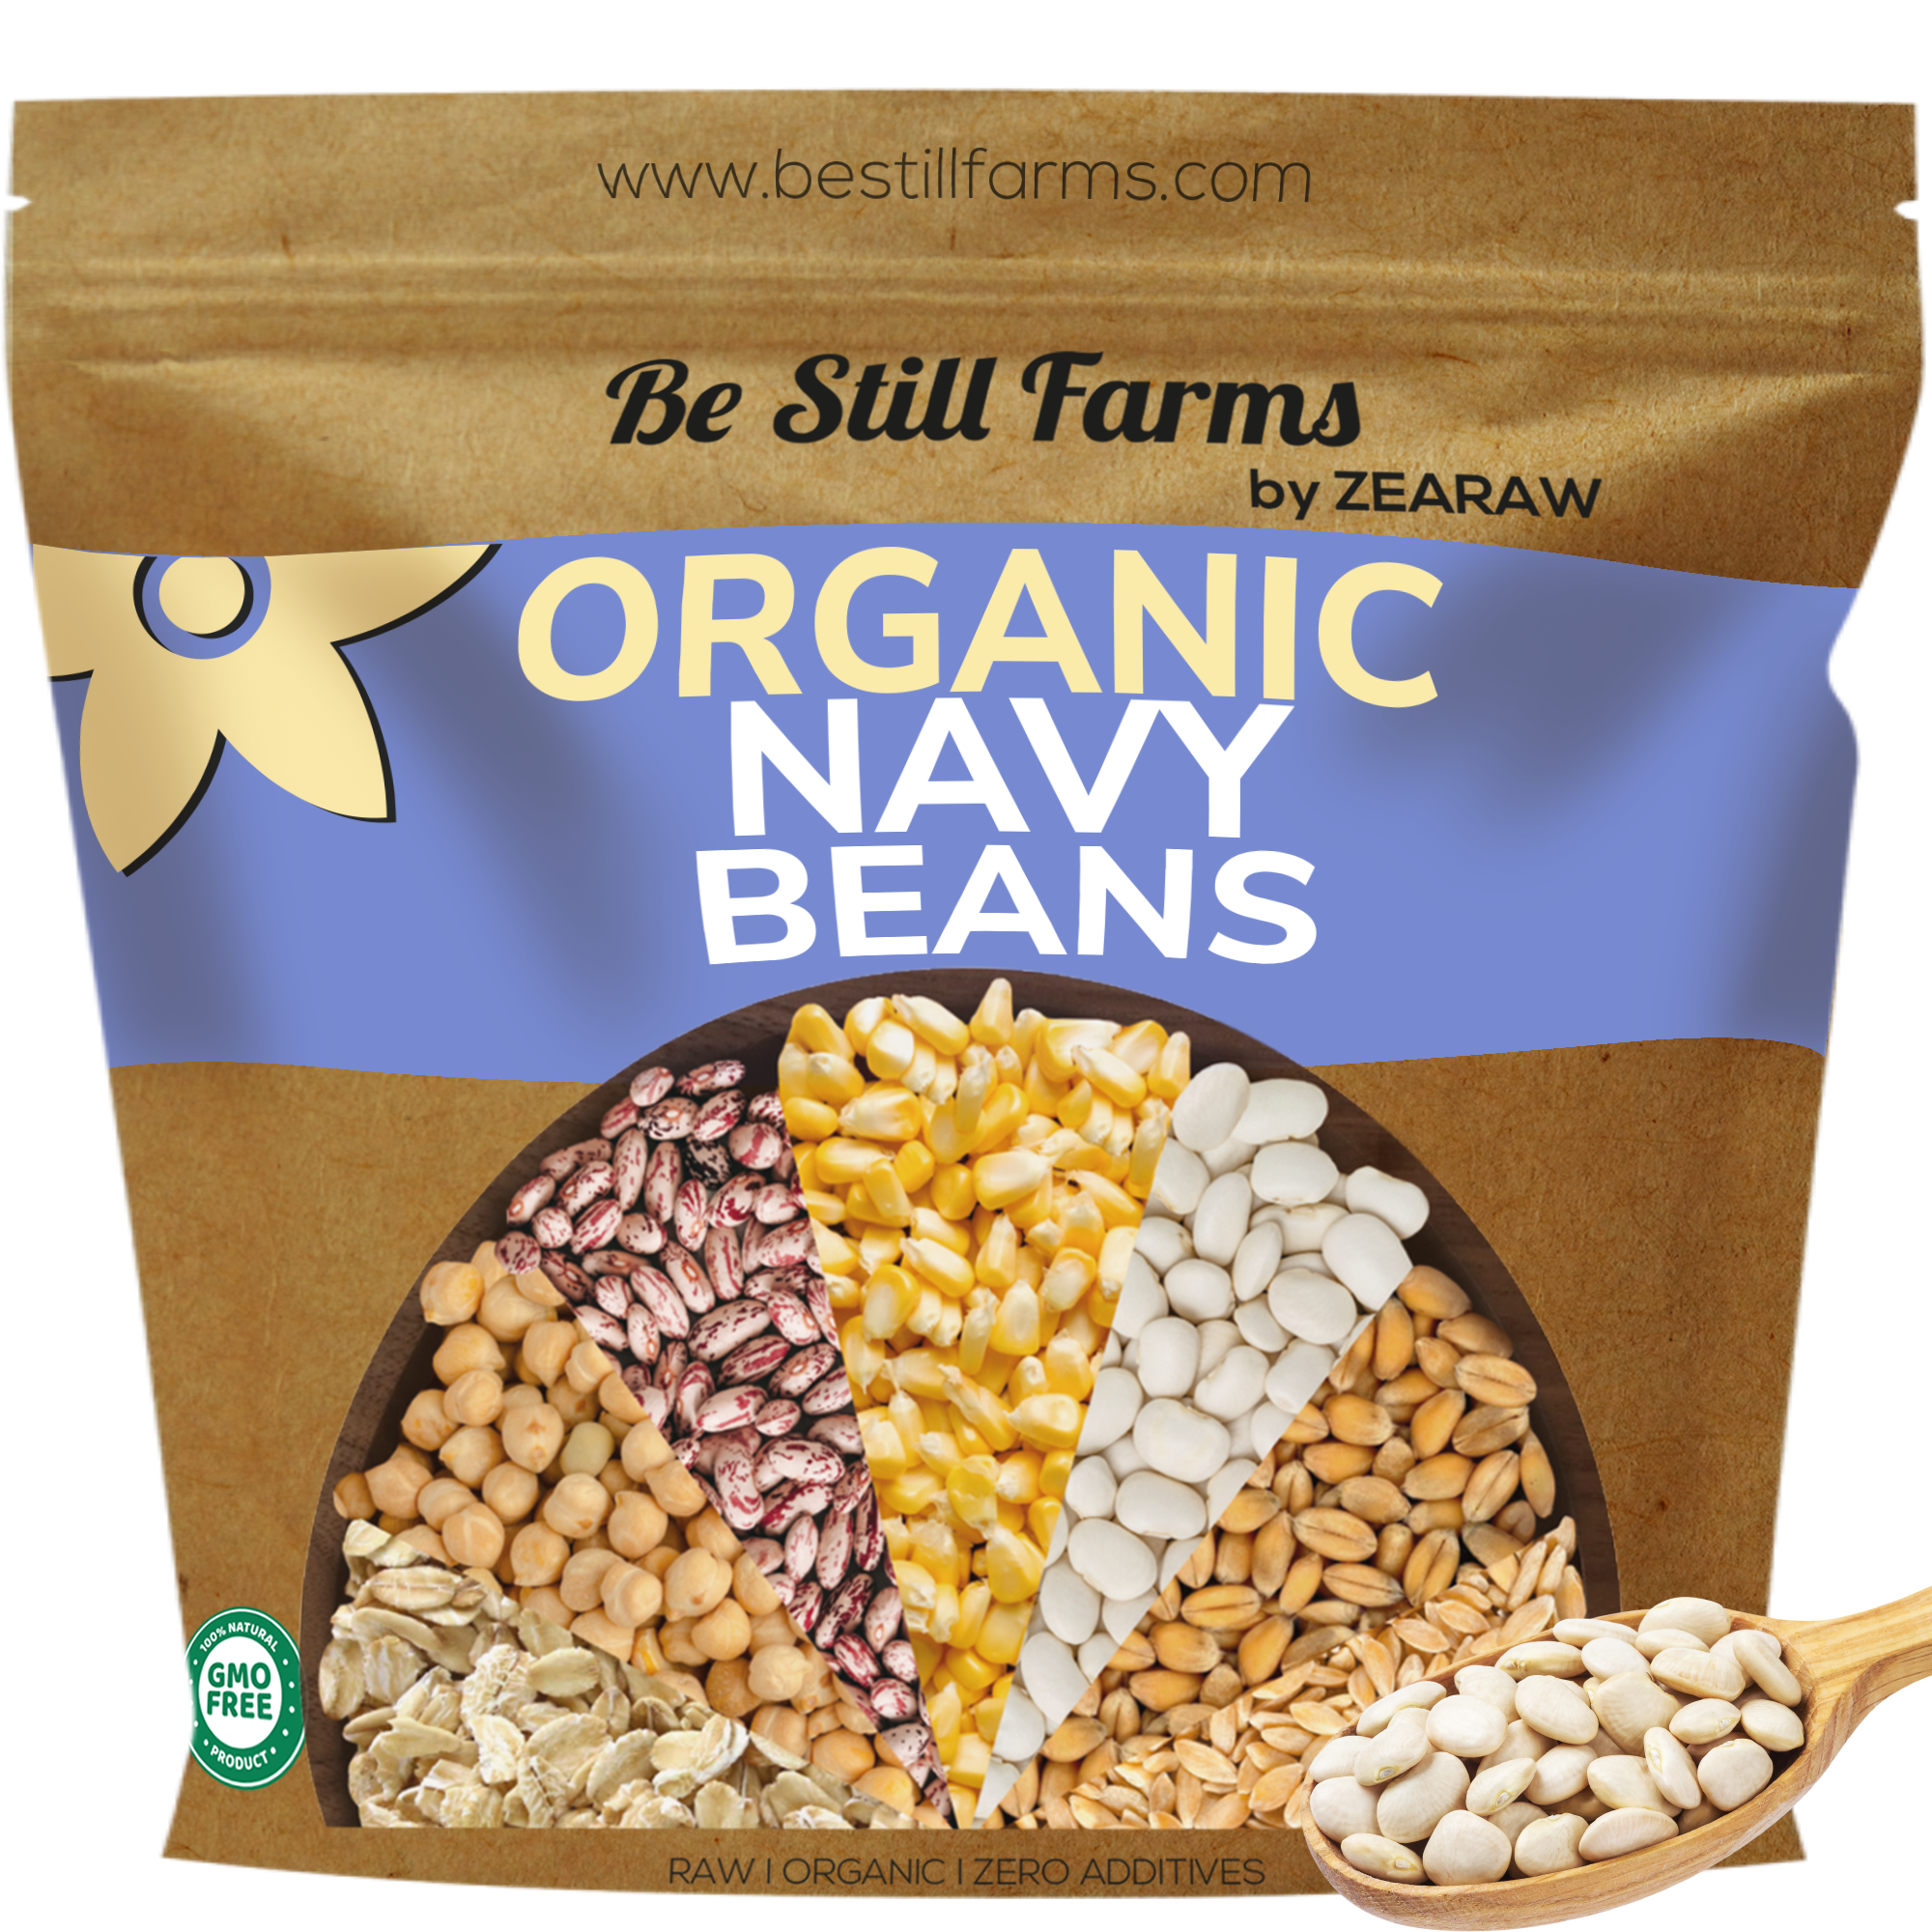 Organic Navy Beans - Be Still Farms